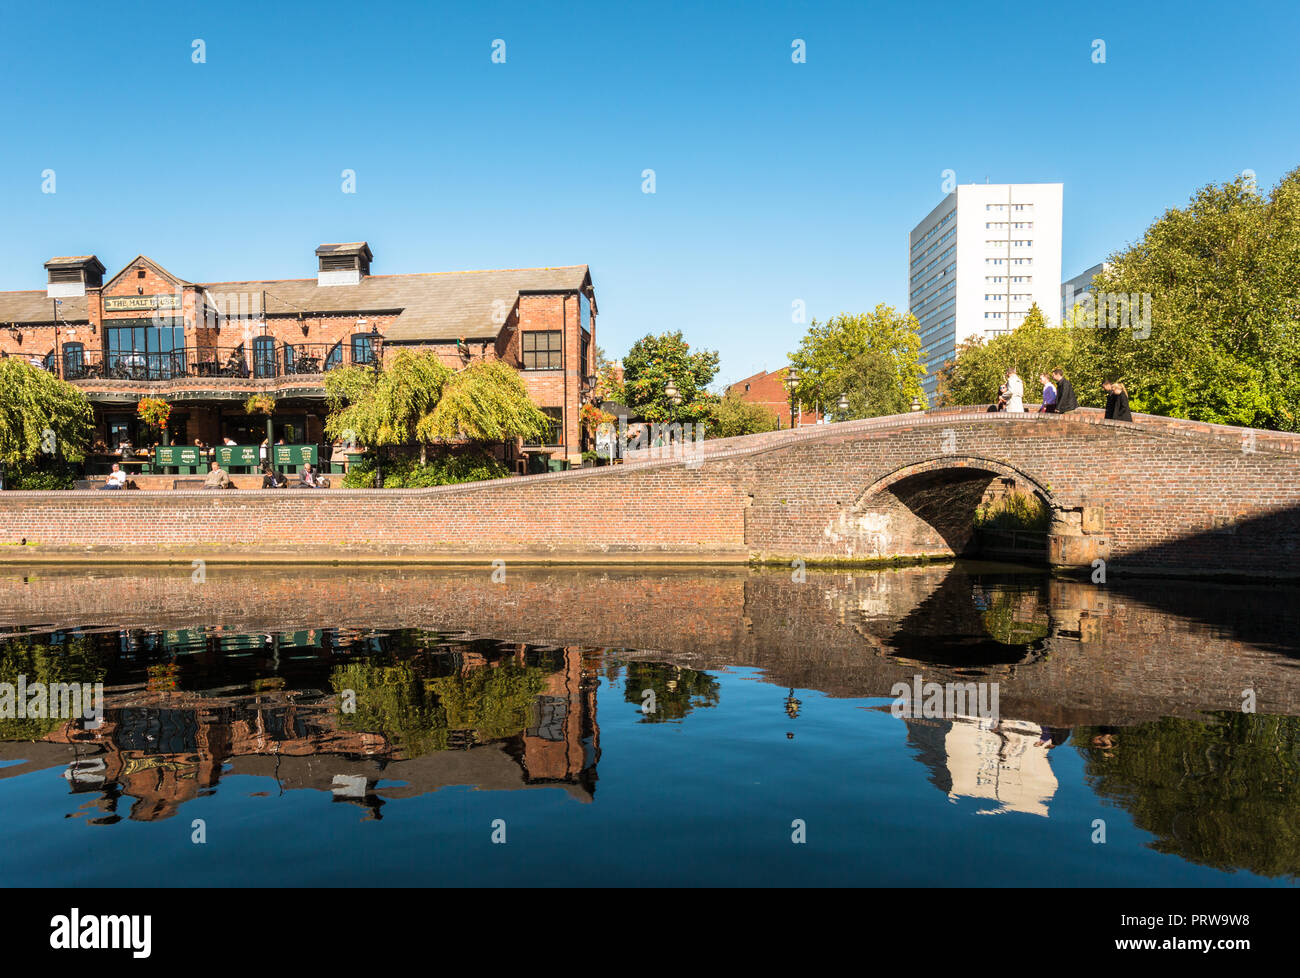 Canal bridge with the Malthouse pub and restaurant, Brindley Place, Birmingham UK Stock Photo